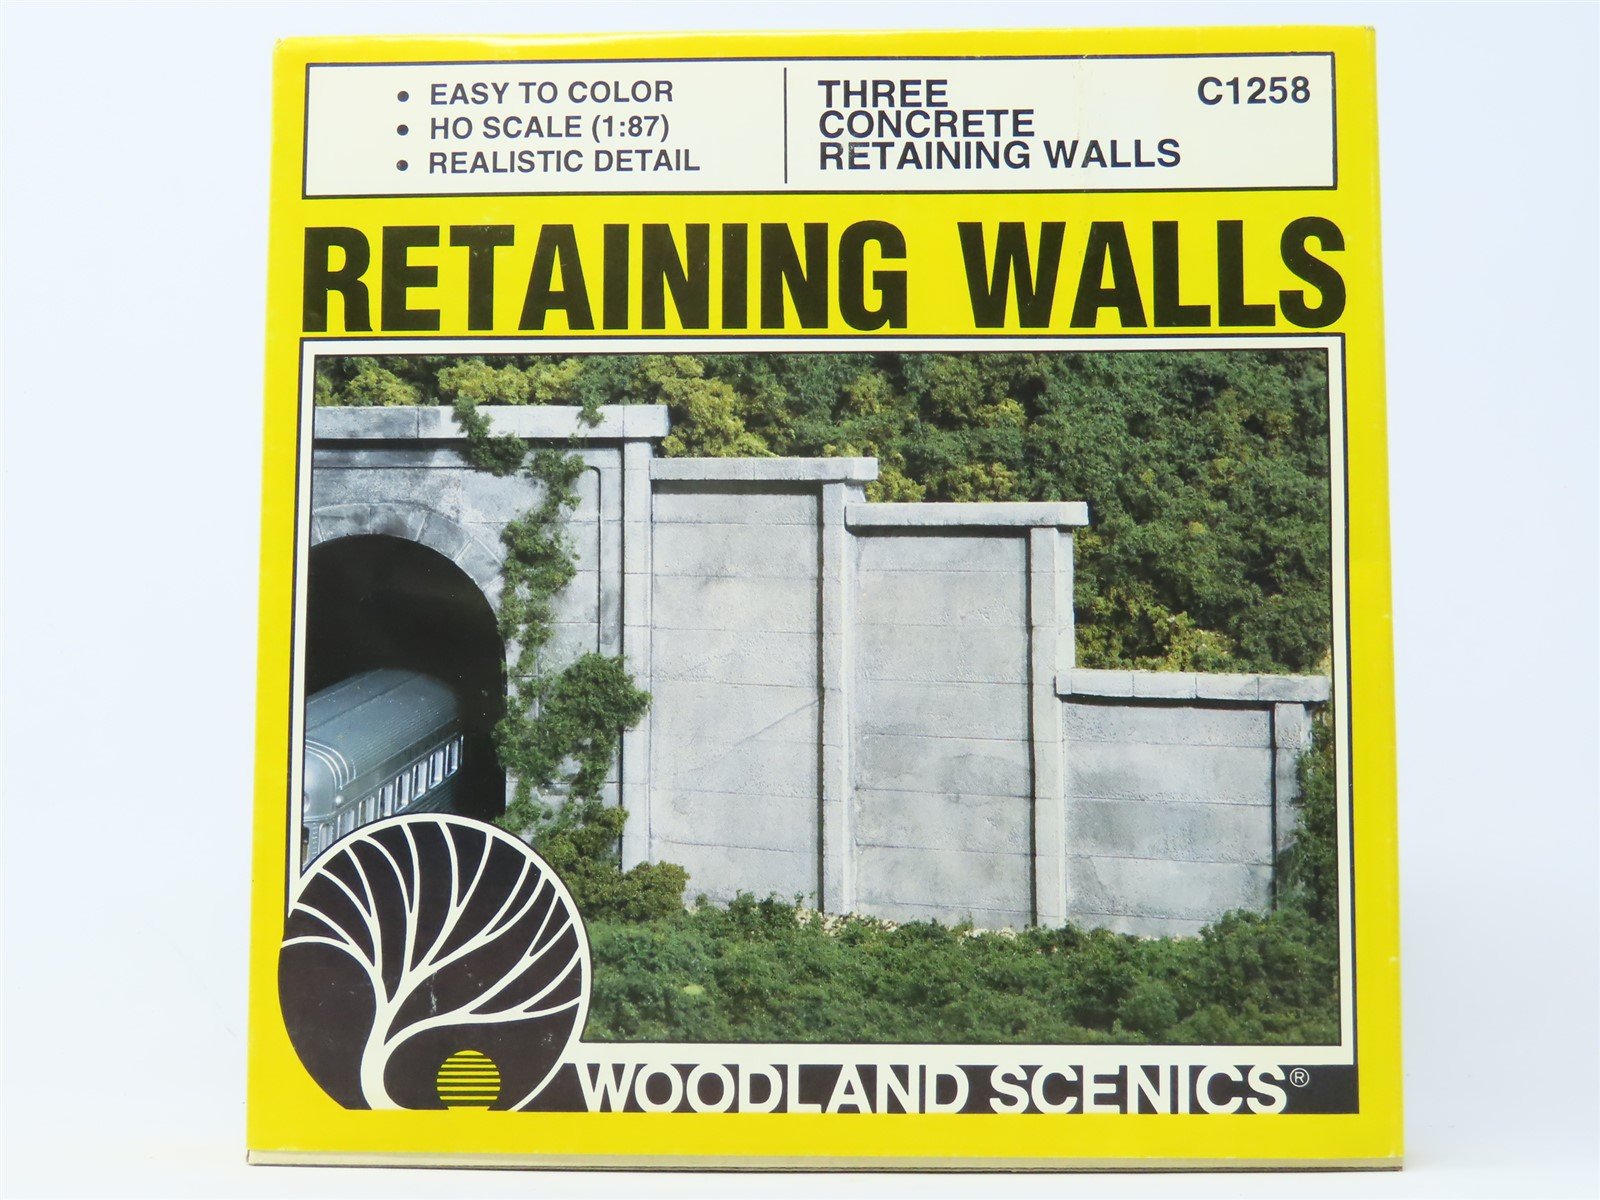 HO 1/87 Scale Woodland Scenics #C1258 Three Concrete Retaining Walls